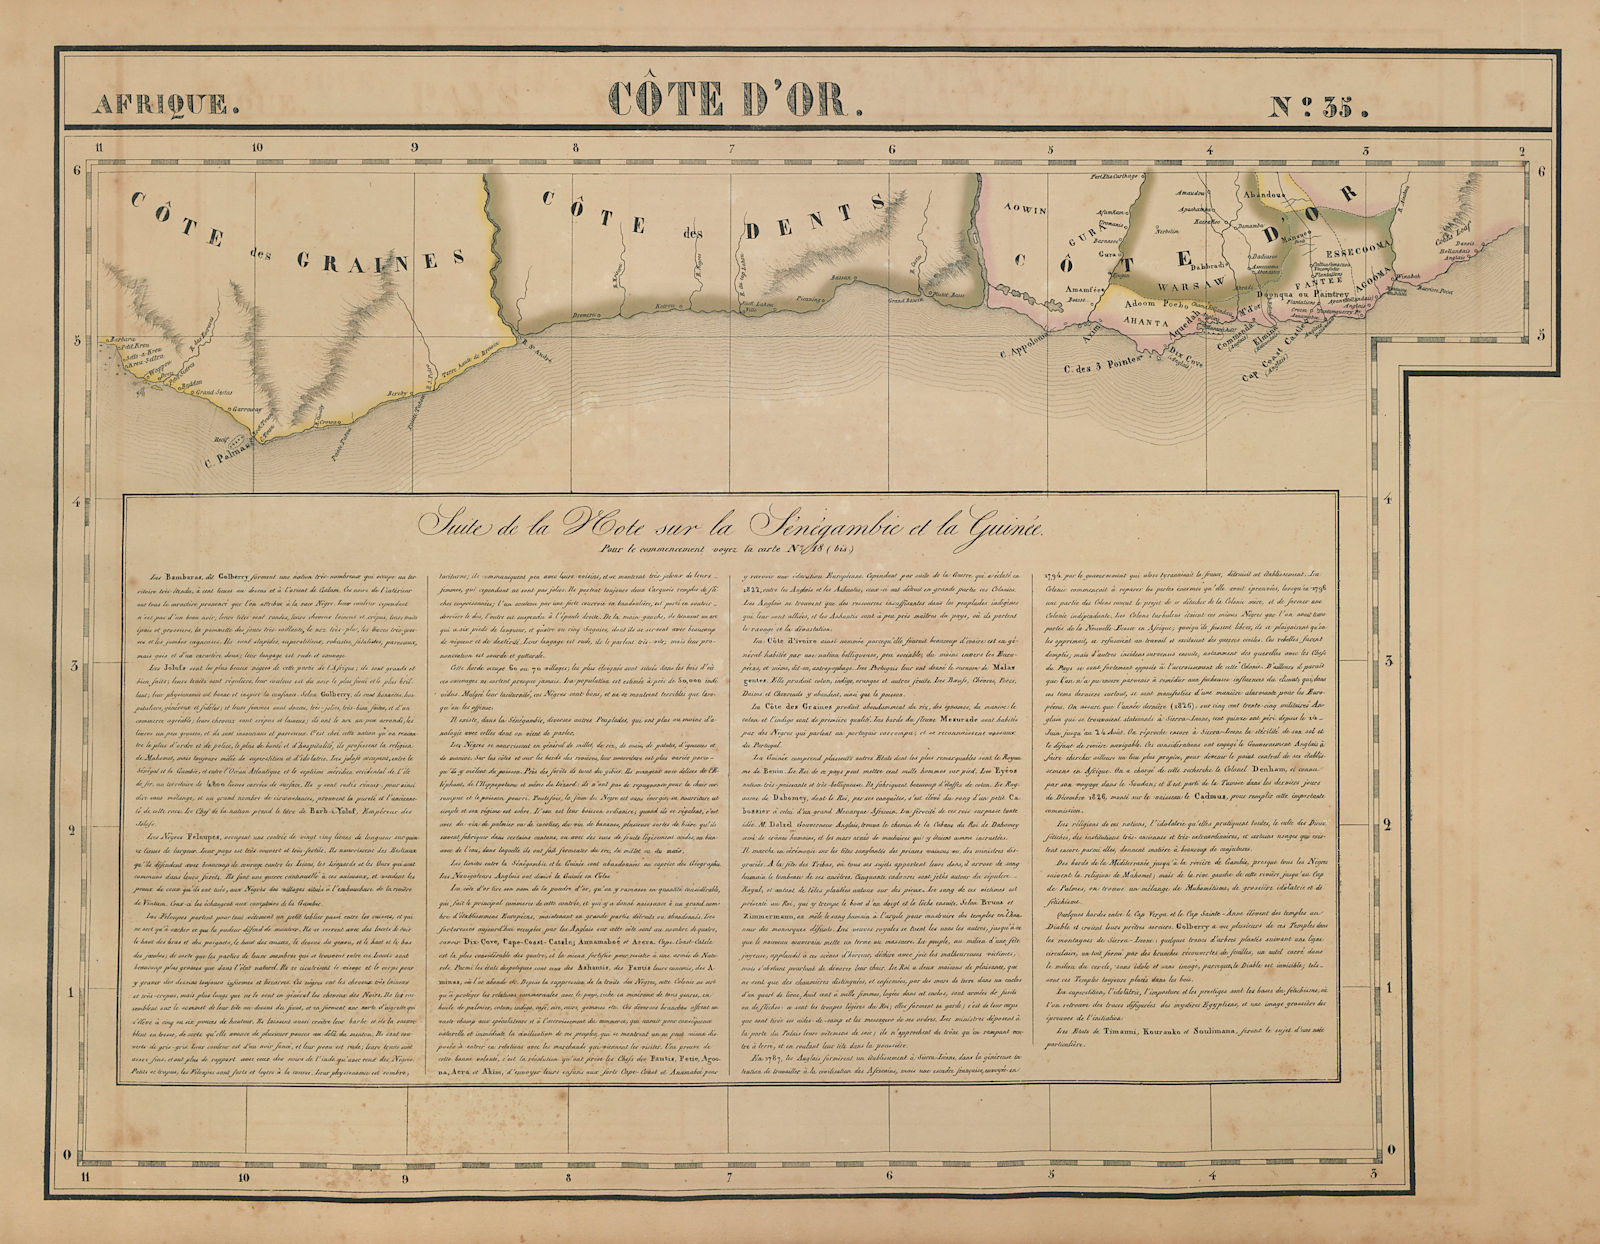 Afrique. Côte d'Or 35 Ivory Coast, Ghana & eastern Liberia VANDERMAELEN 1827 map